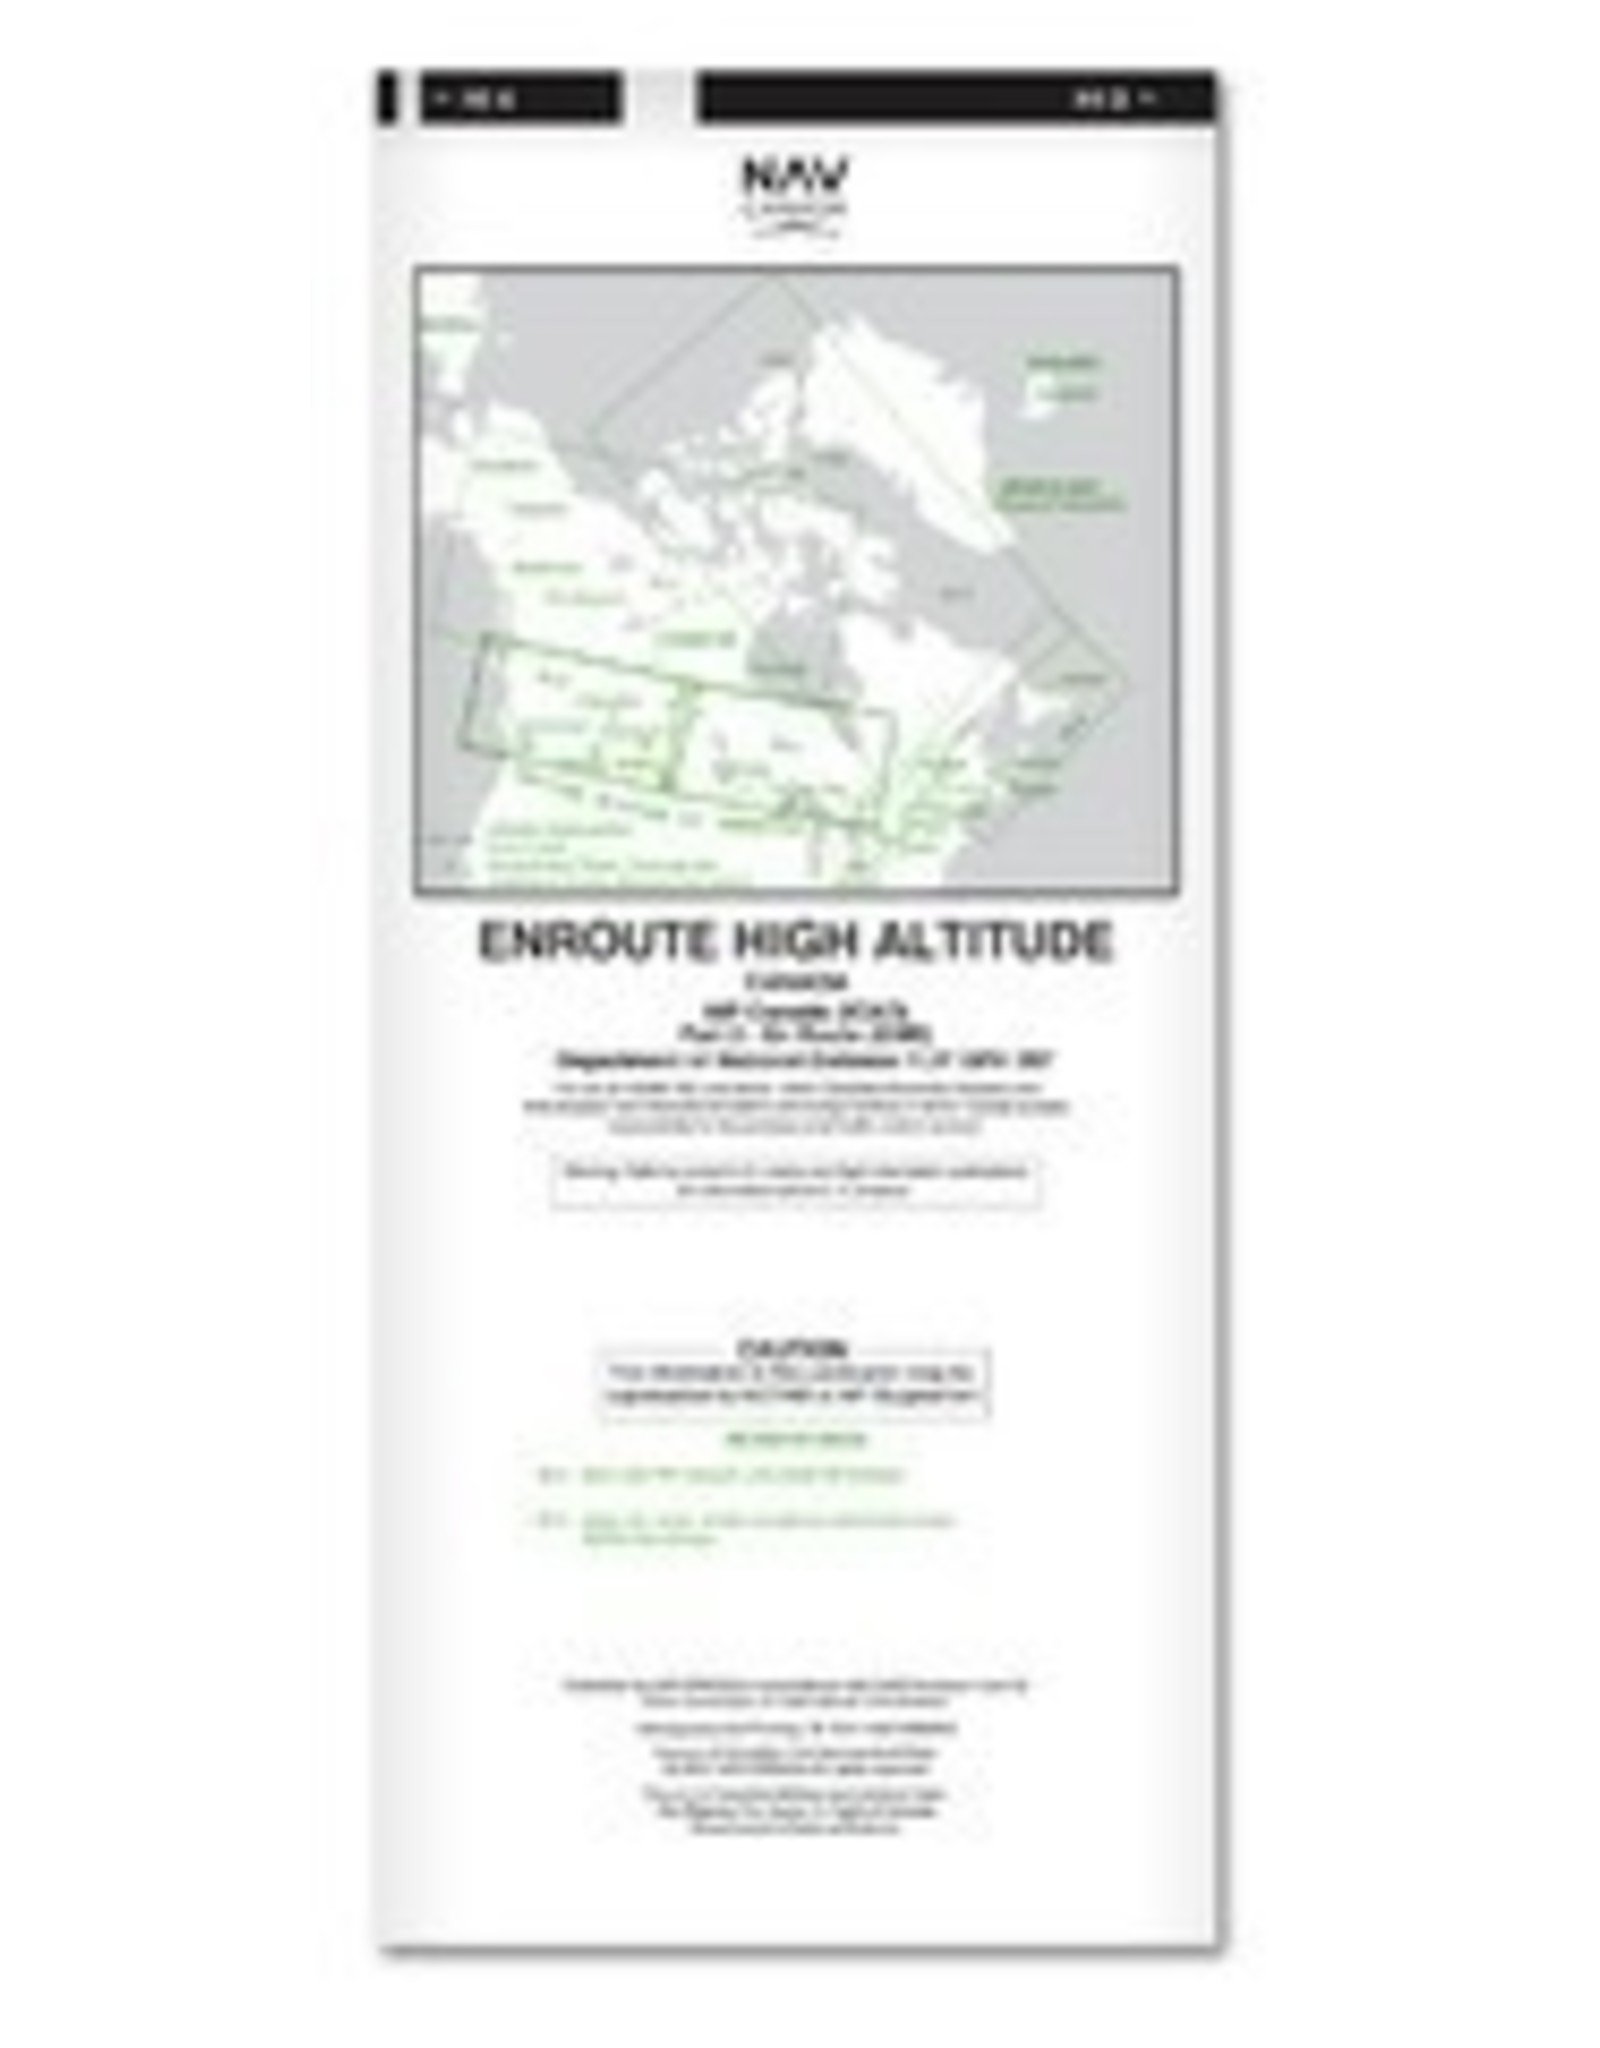 HI 3/4 Enroute High Altitude - Sep 8, 22 to Nov 3, 22